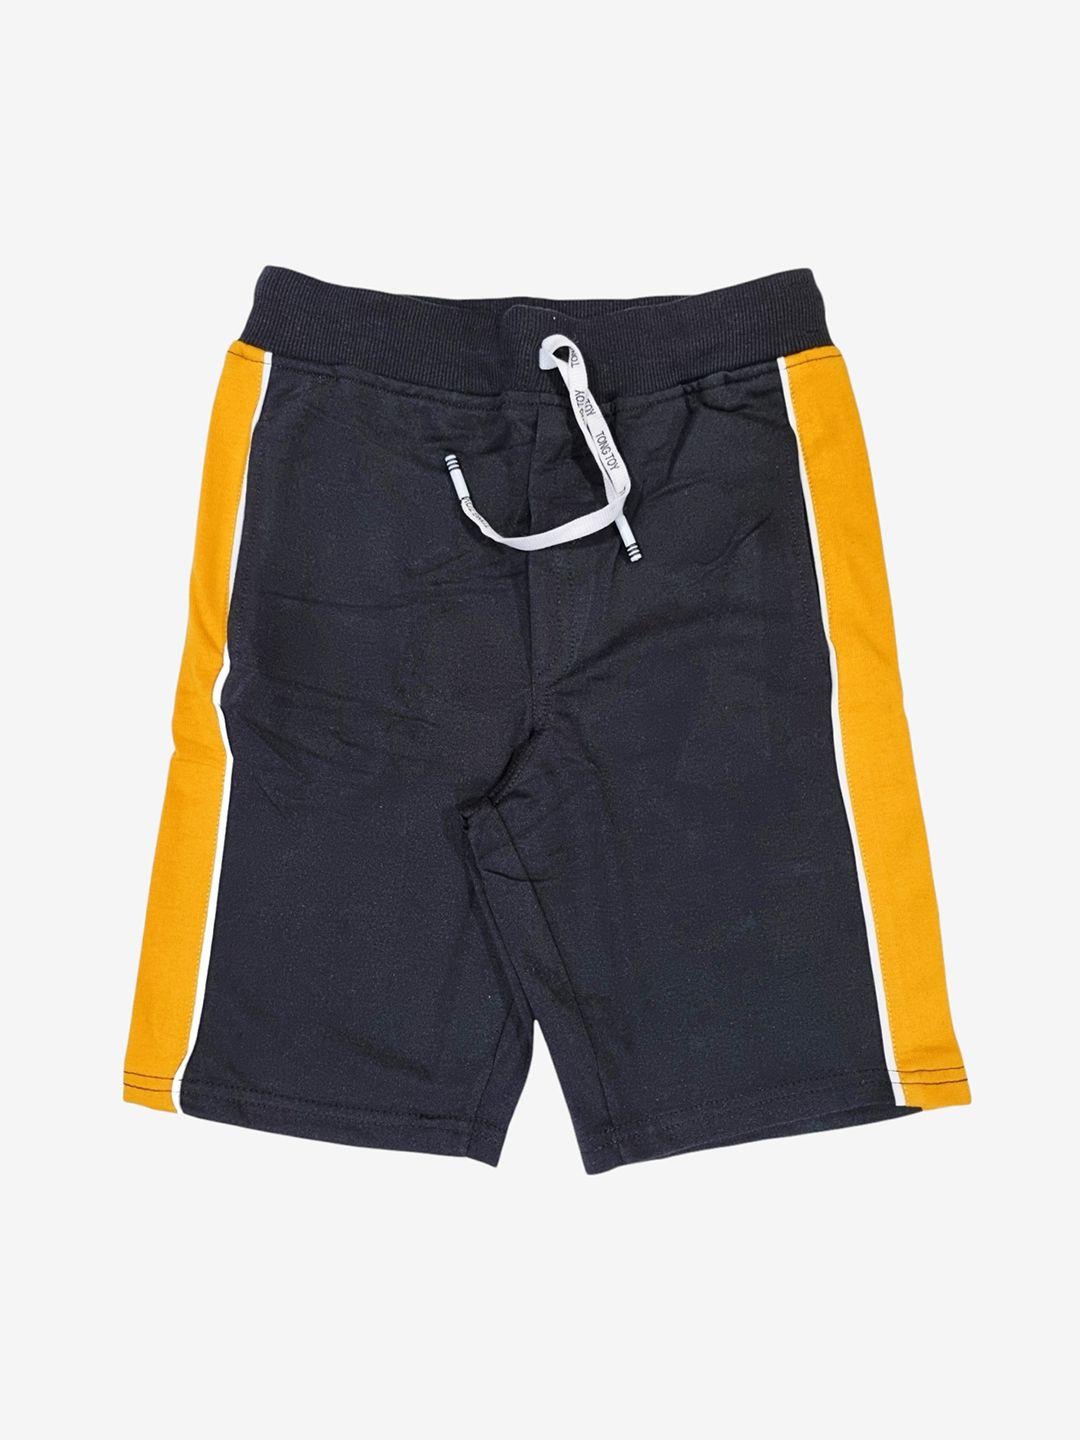 alan jones boys black & yellow colourblocked shorts